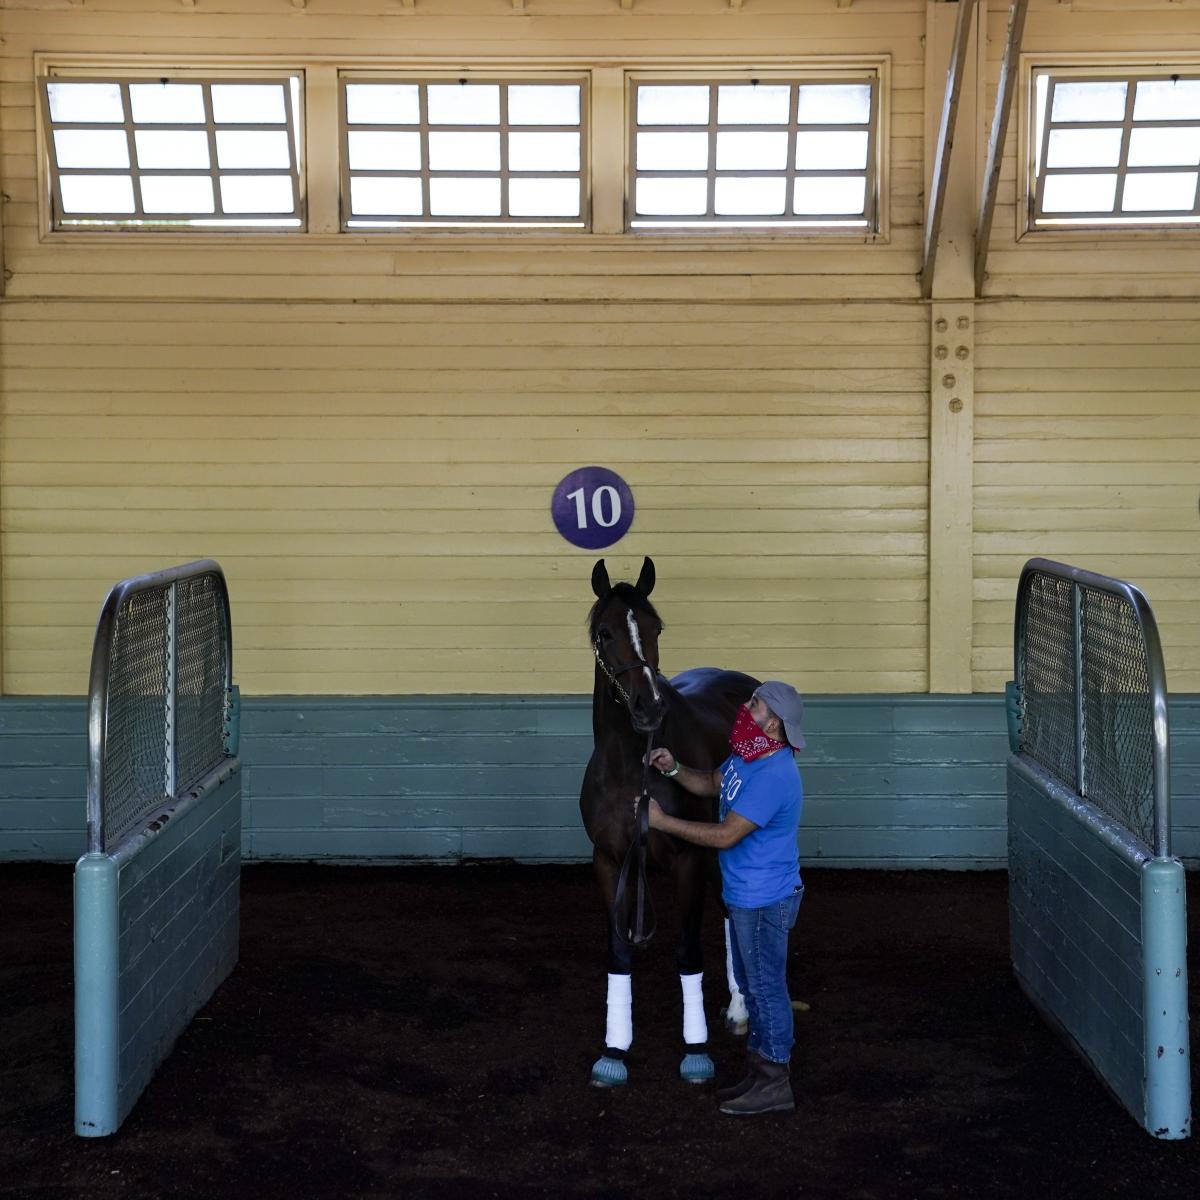 4-Year Aged Colt Strictly Biz Is 15th Horse to Die at Santa Anita This Season